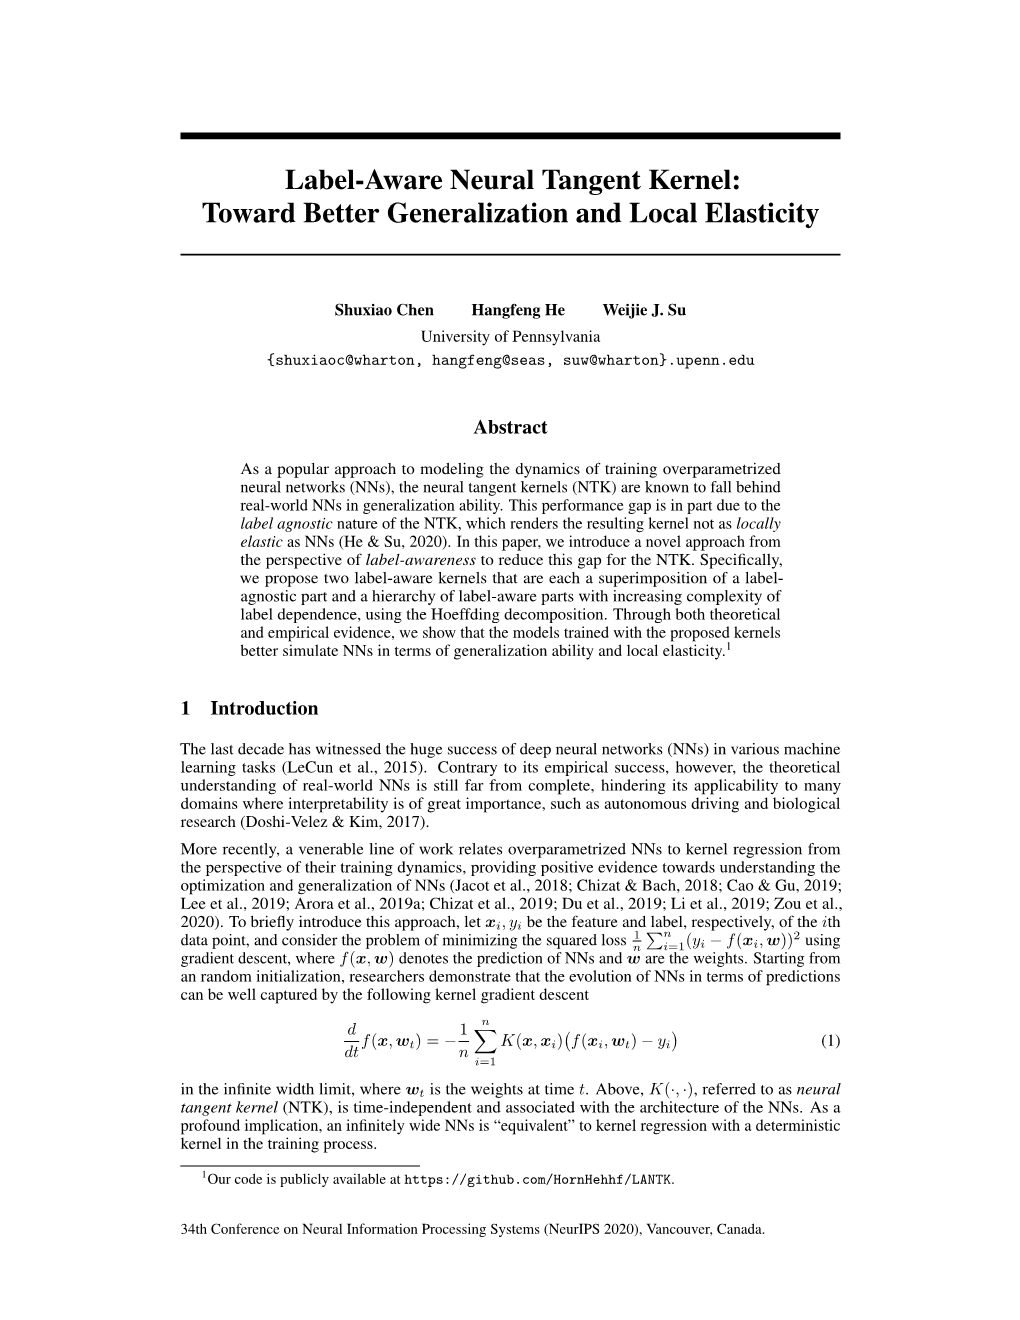 Label-Aware Neural Tangent Kernel: Toward Better Generalization and Local Elasticity